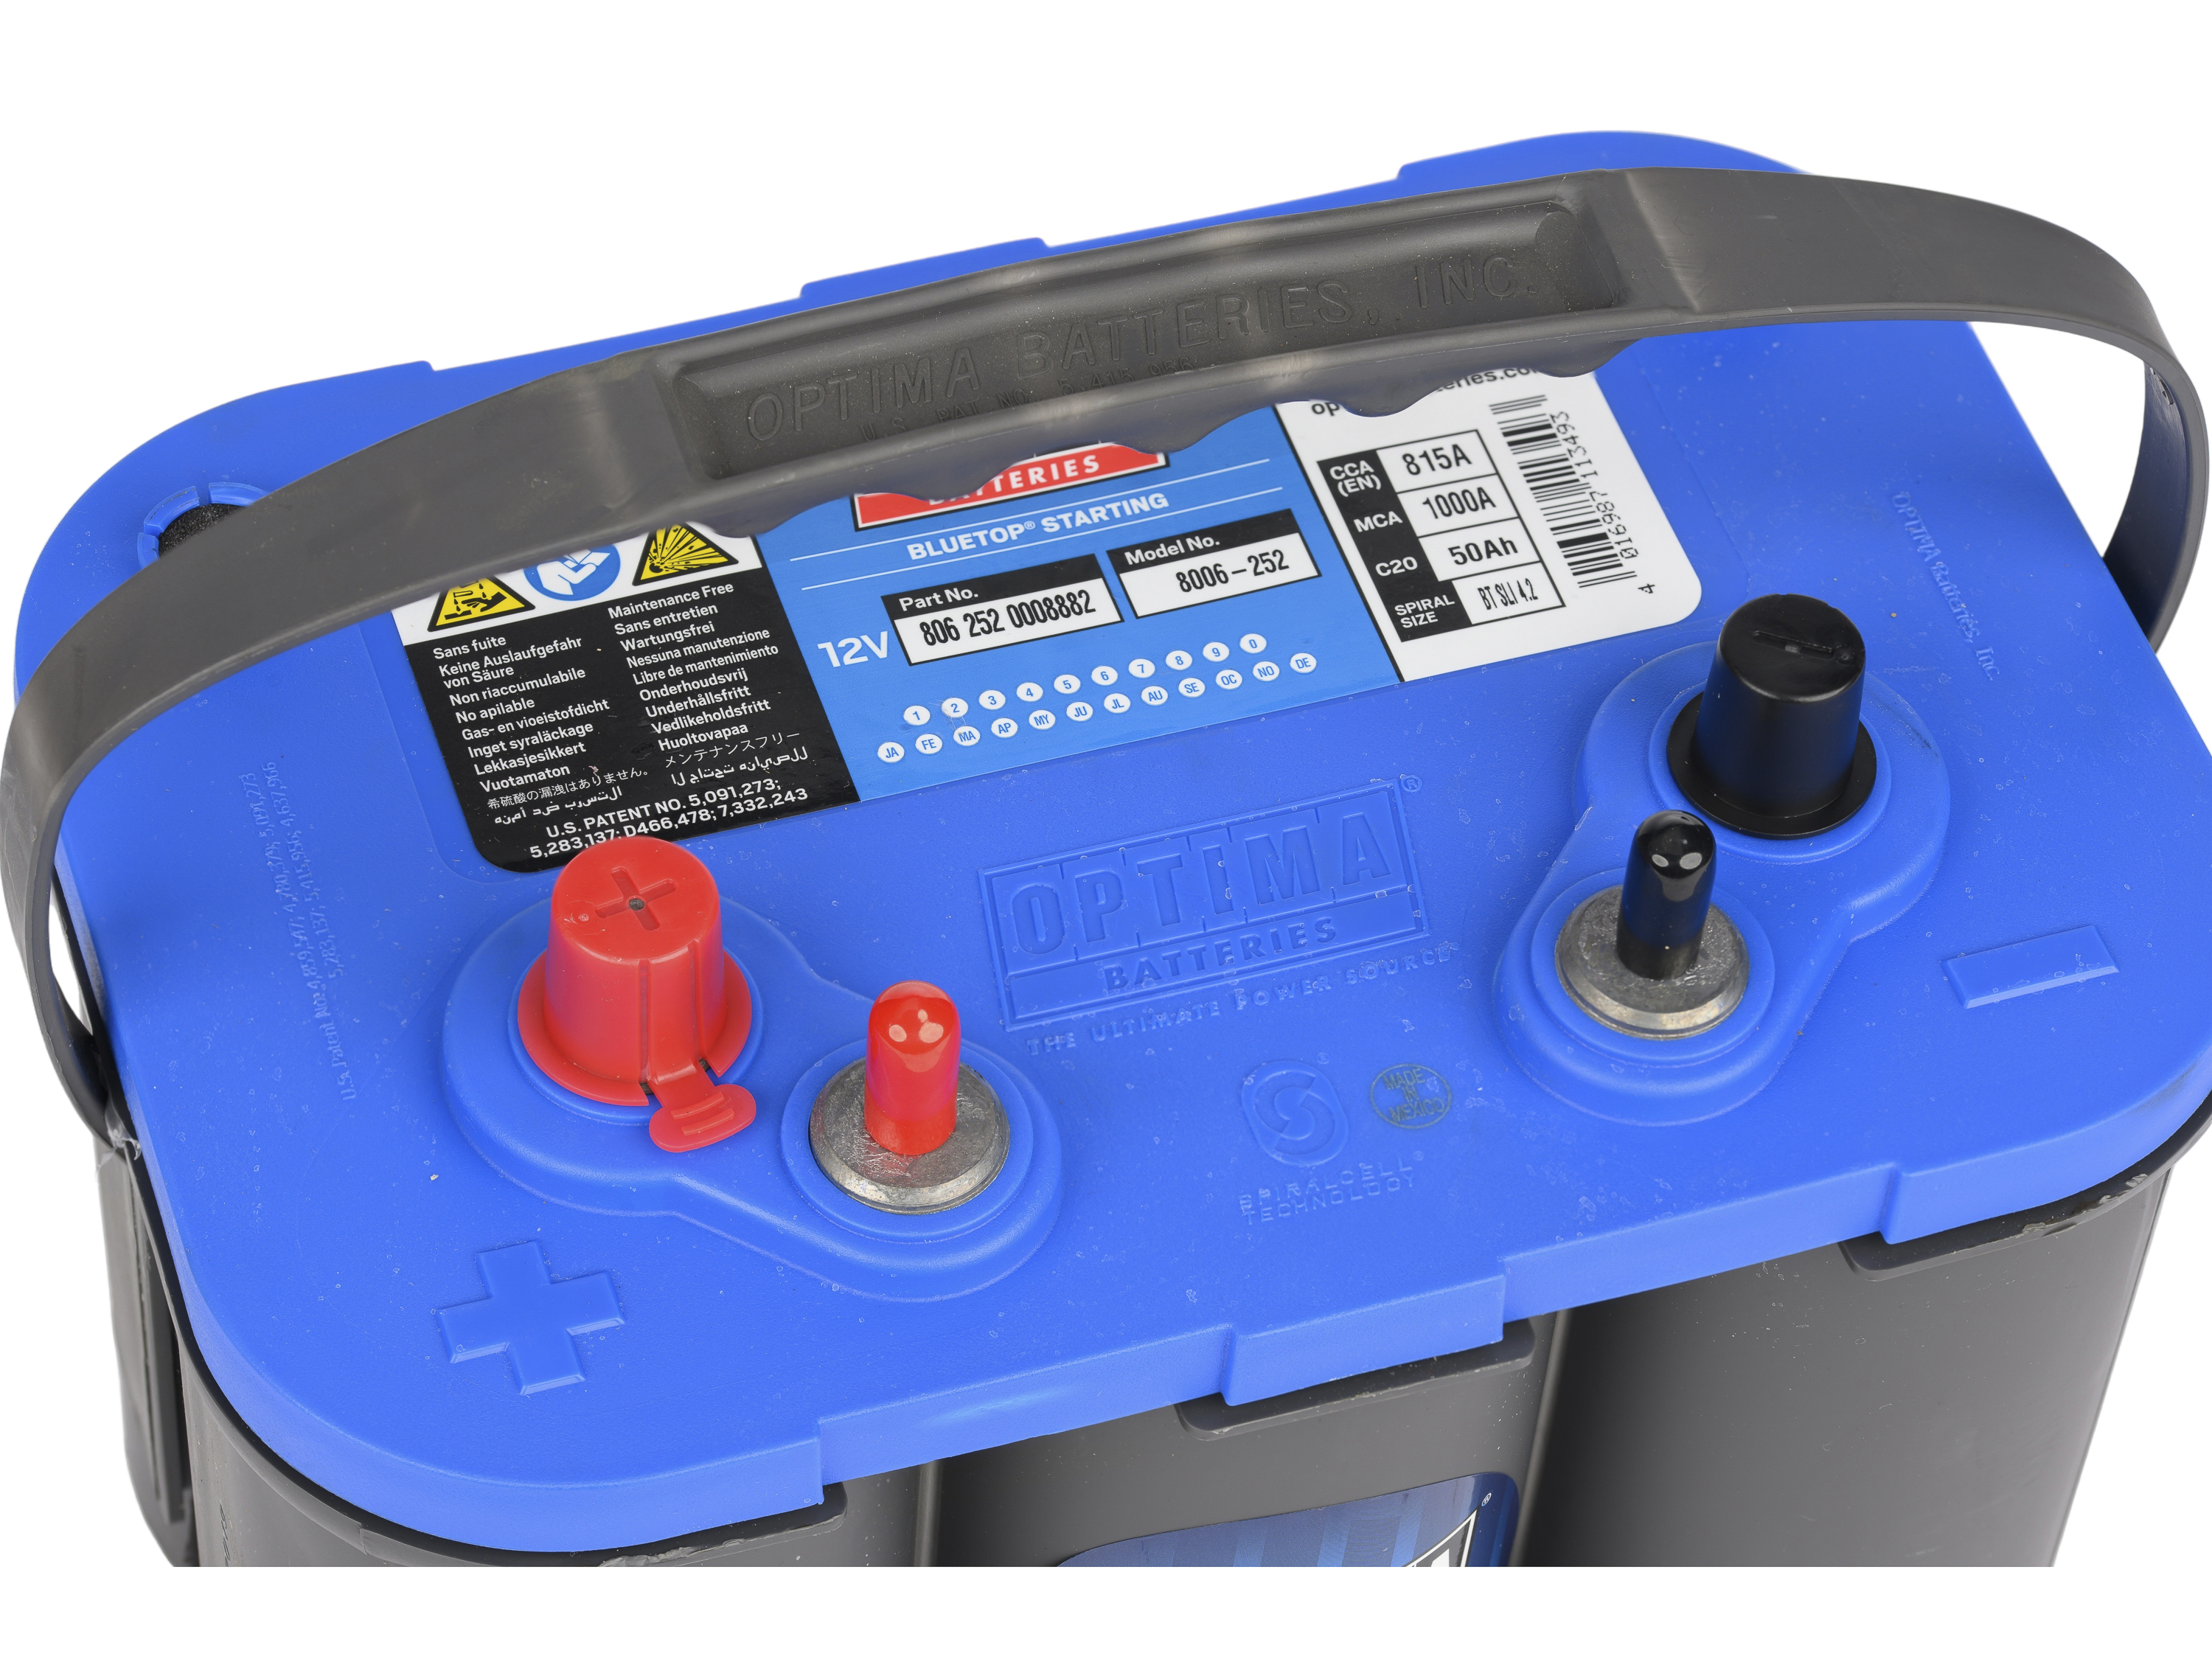 Optima Blue Top SLI-4.2 50AH 815CCA batteri - 806252000